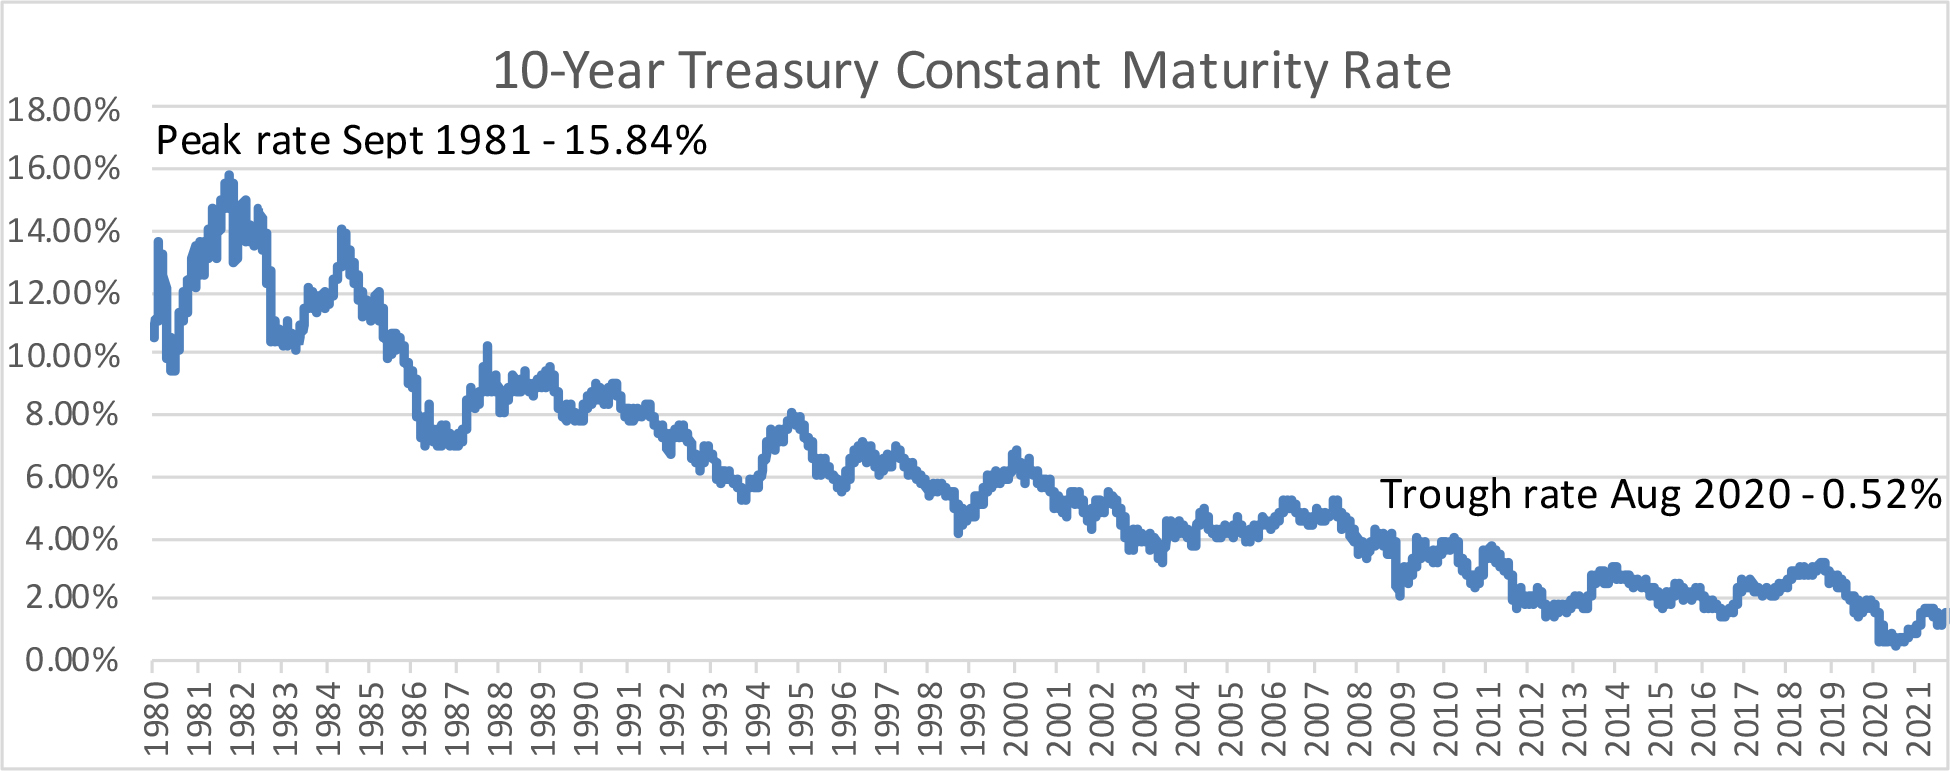 10-year Treasury